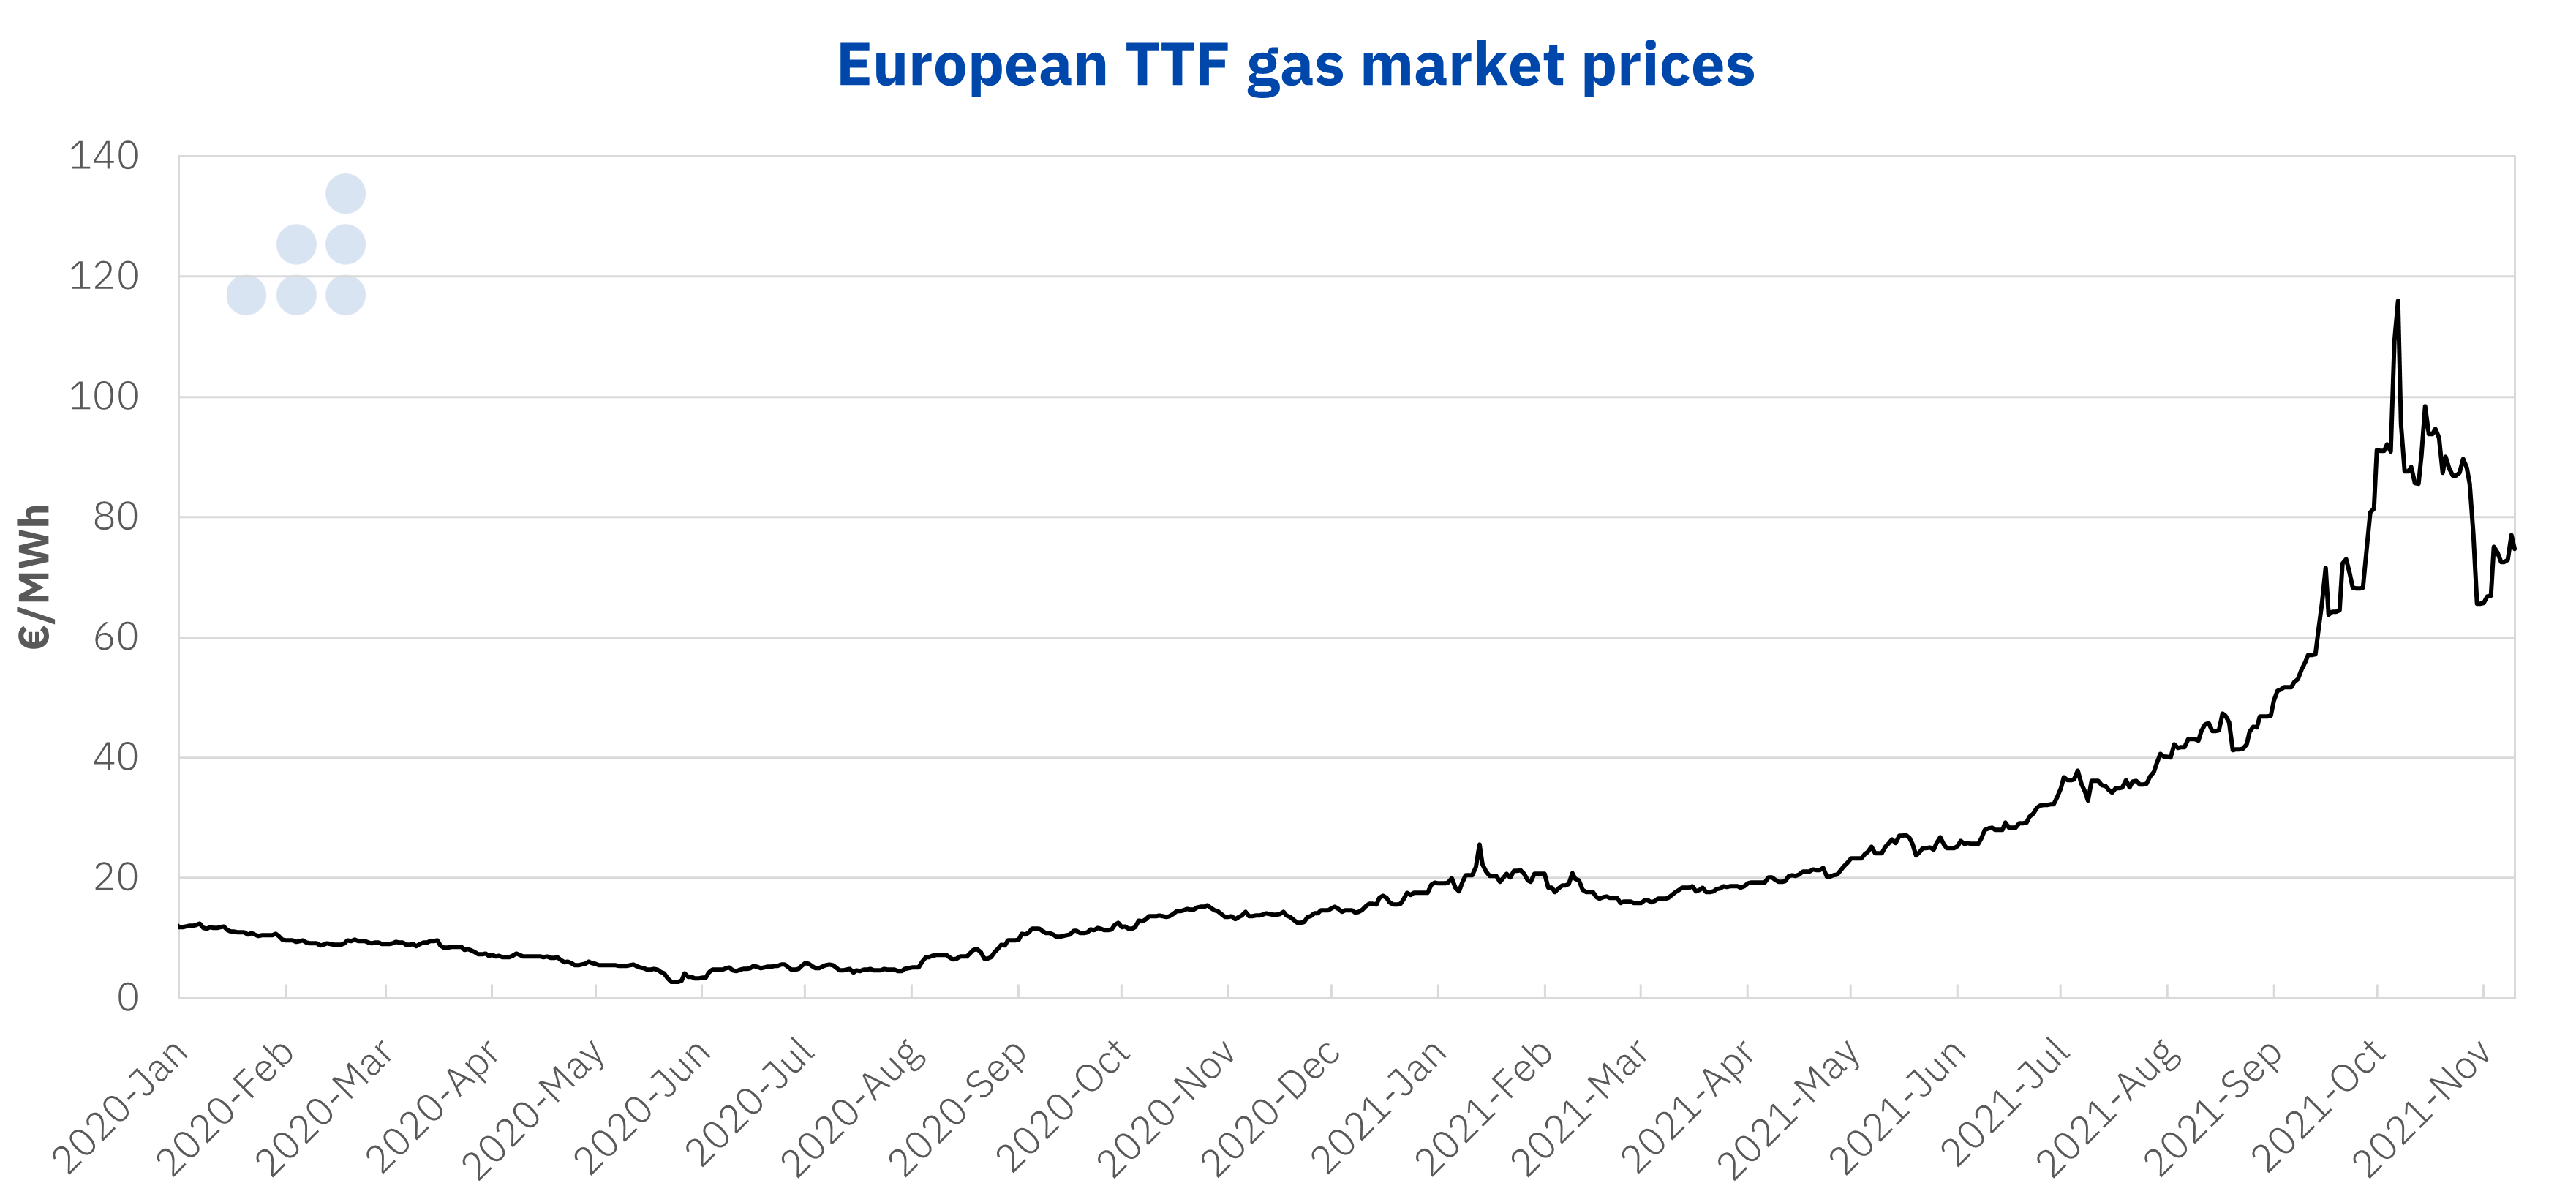 AleaSoft - European TTF gas prices